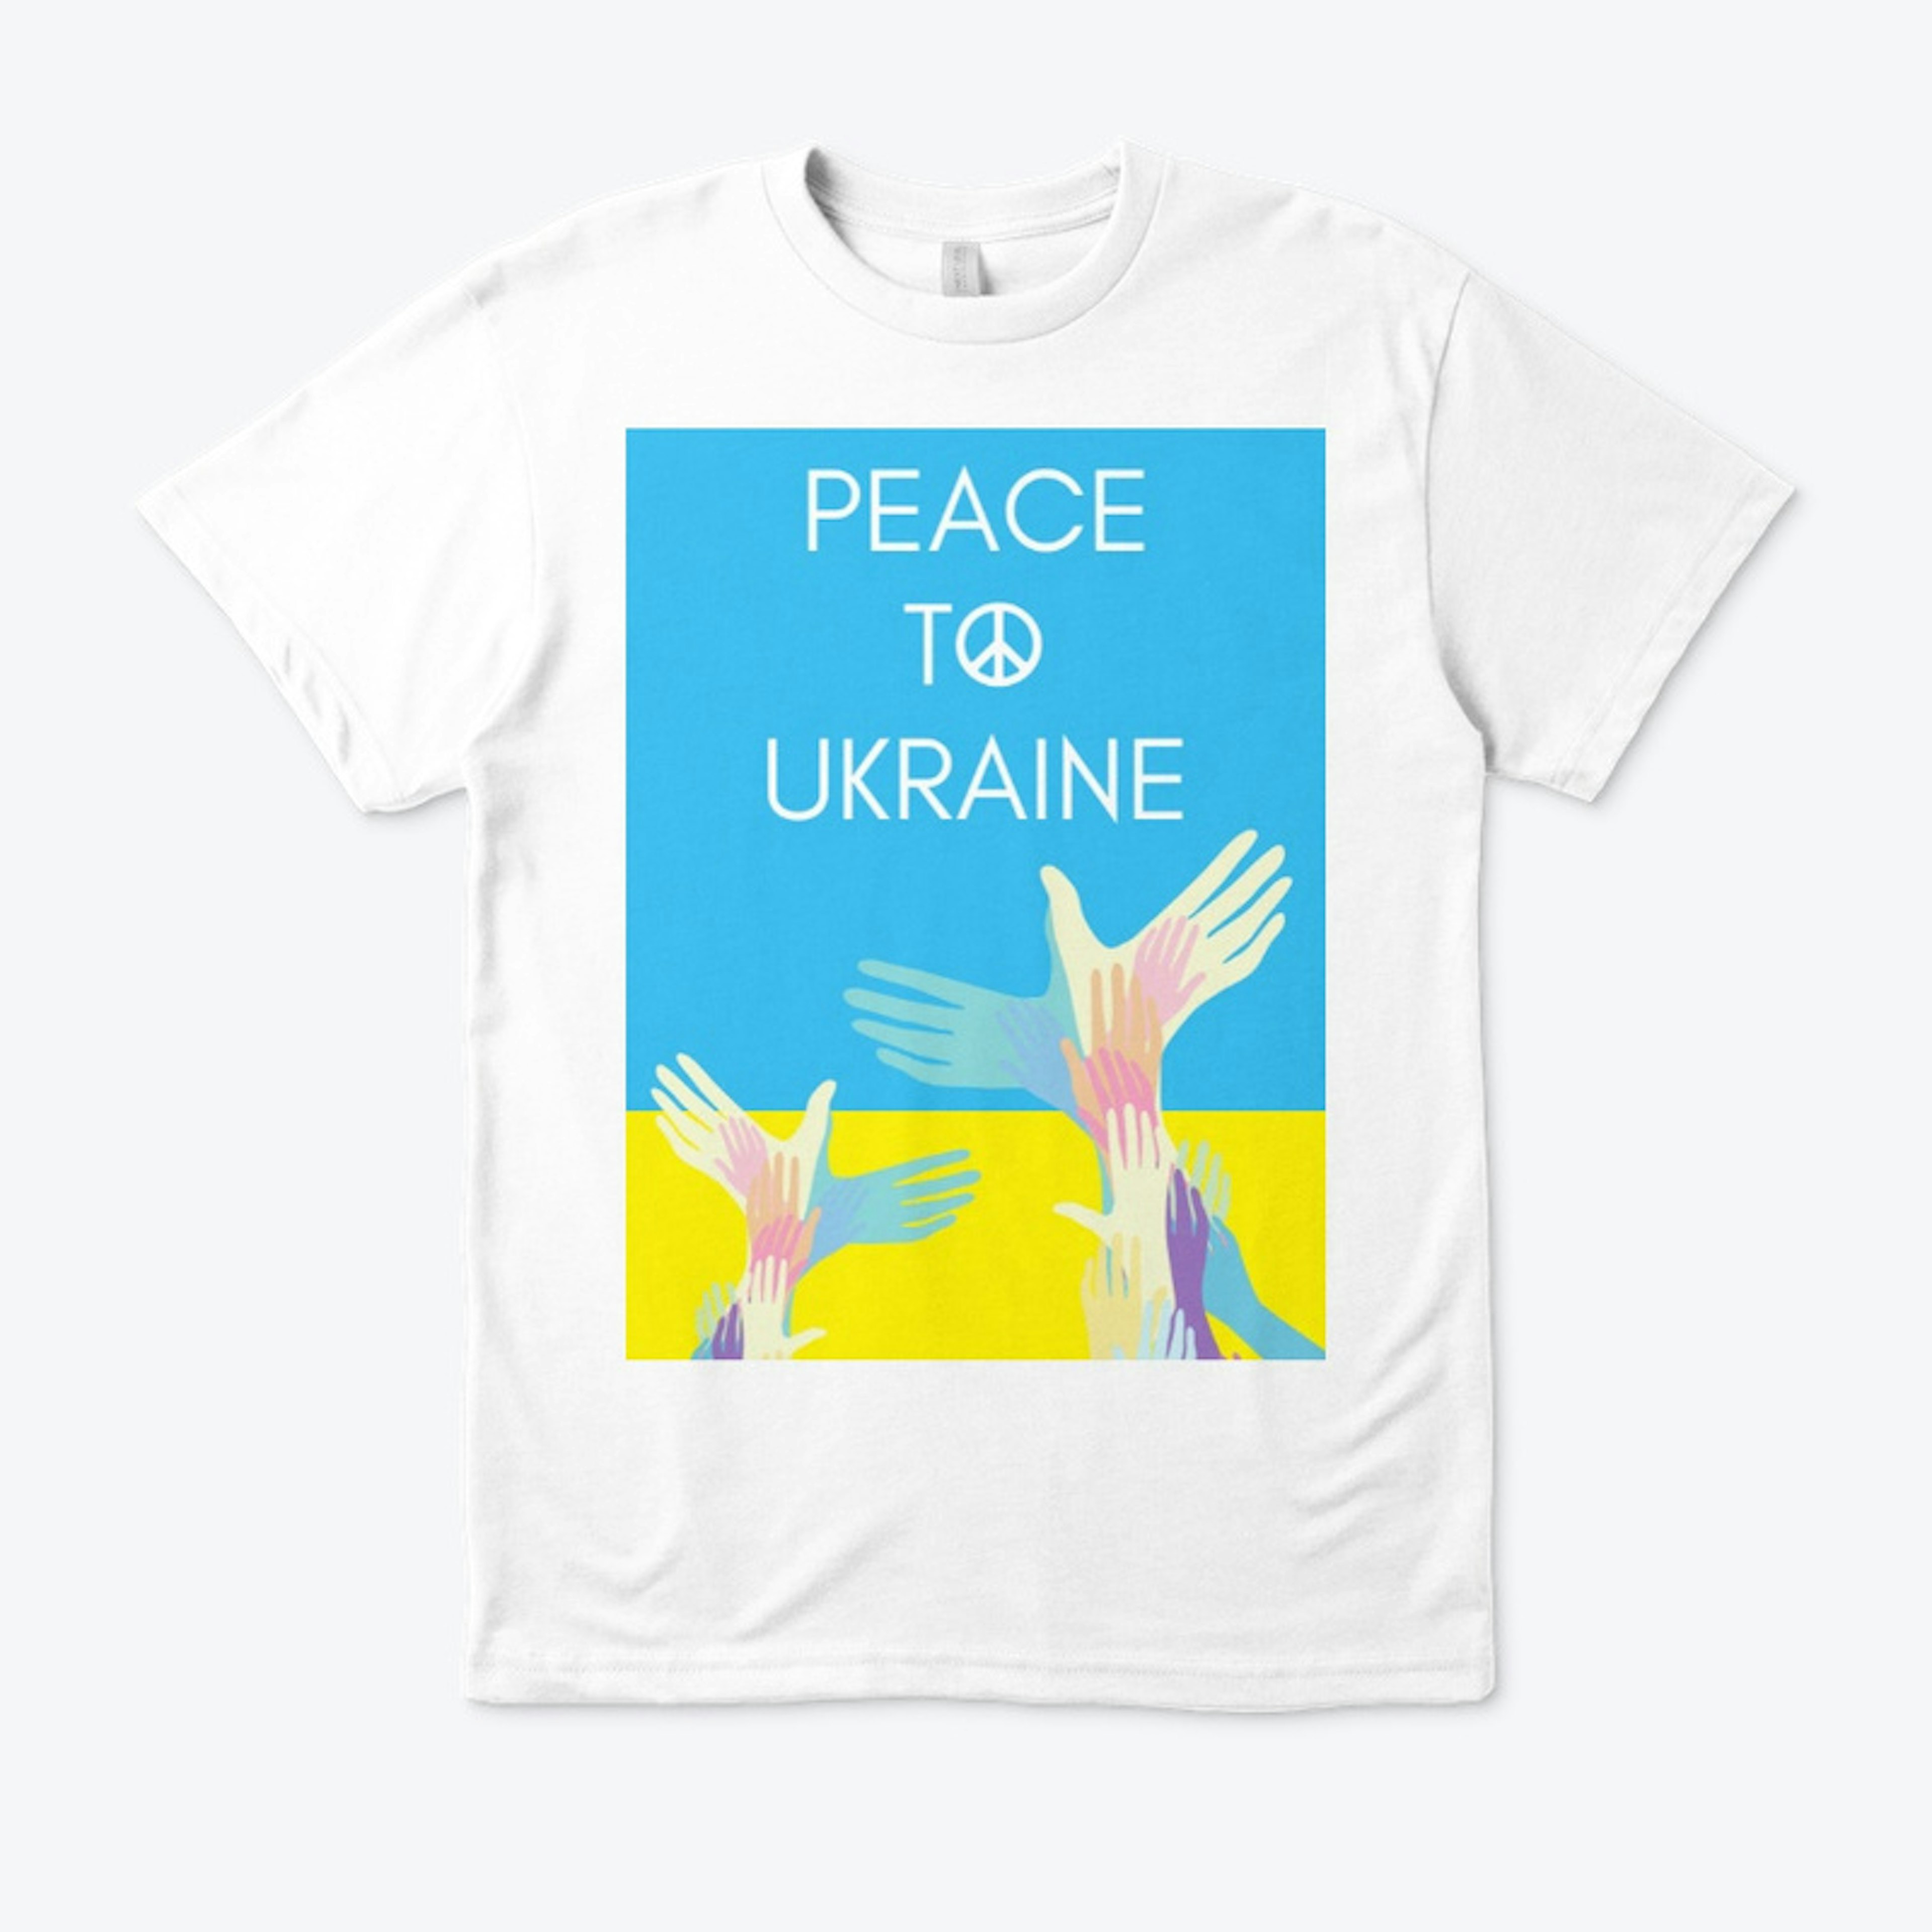 PEACE TO UKRAINE